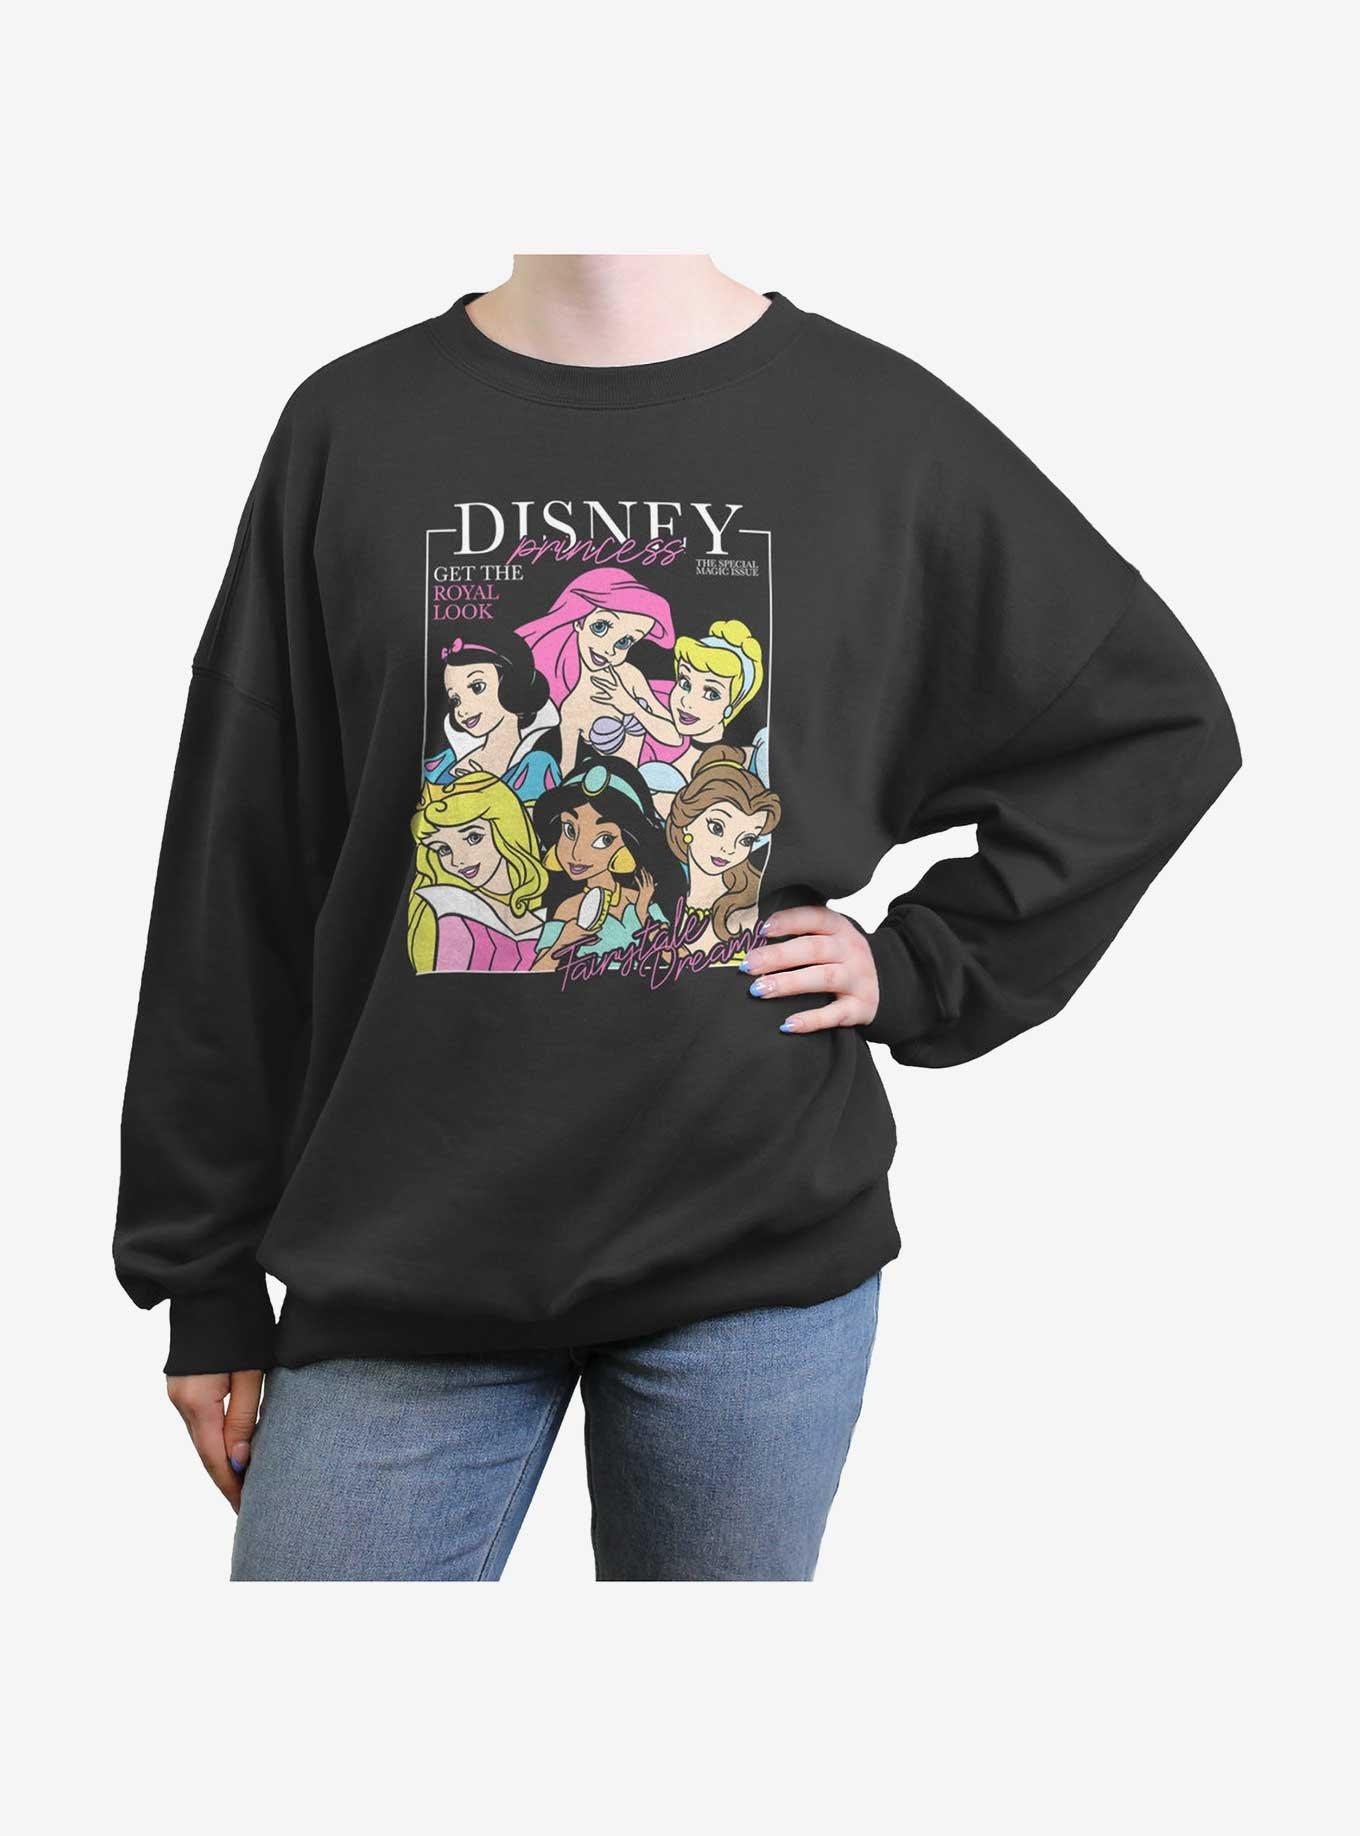 Disney Princesses Royal Look Magazine Cover Girls Oversized Sweatshirt, CHARCOAL, hi-res